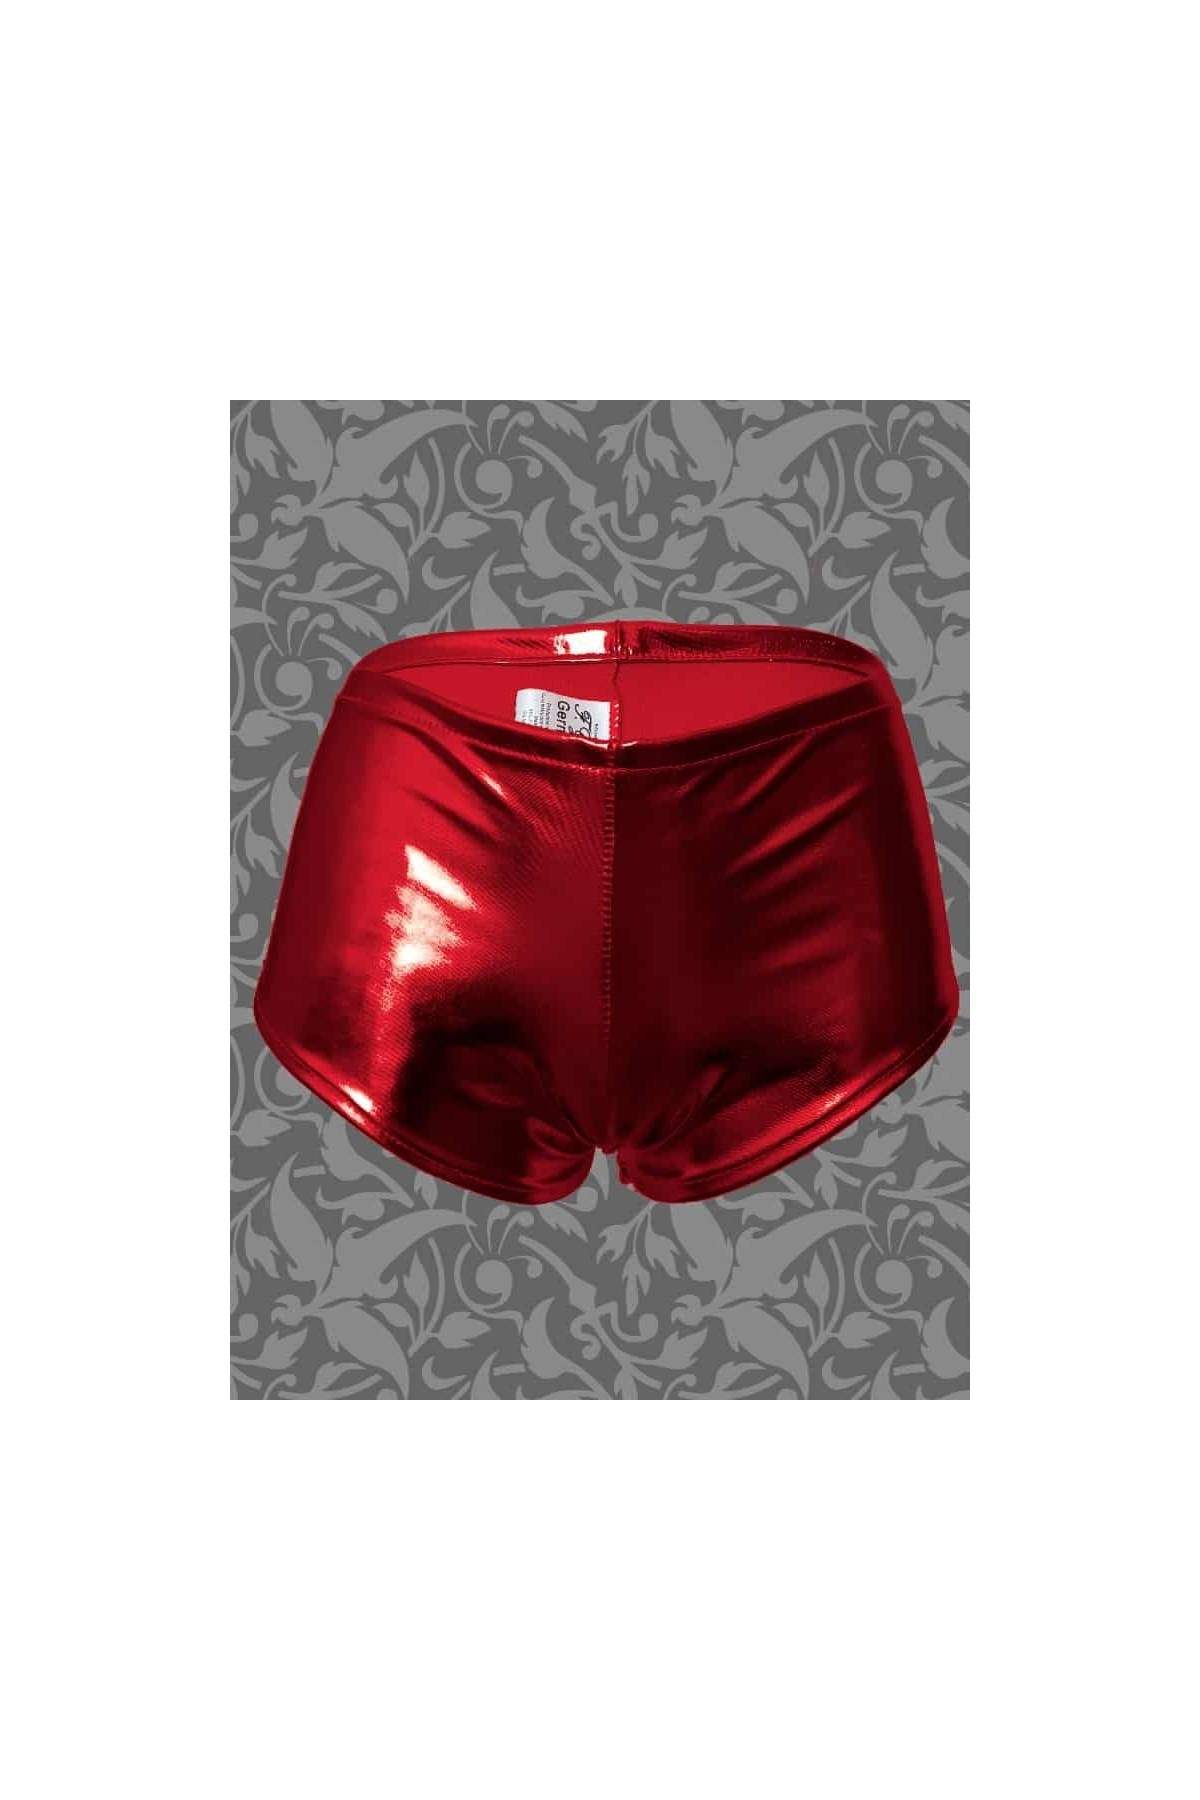 Leather-look hotpants red metallic sizes 34 - 42 - Rabatt